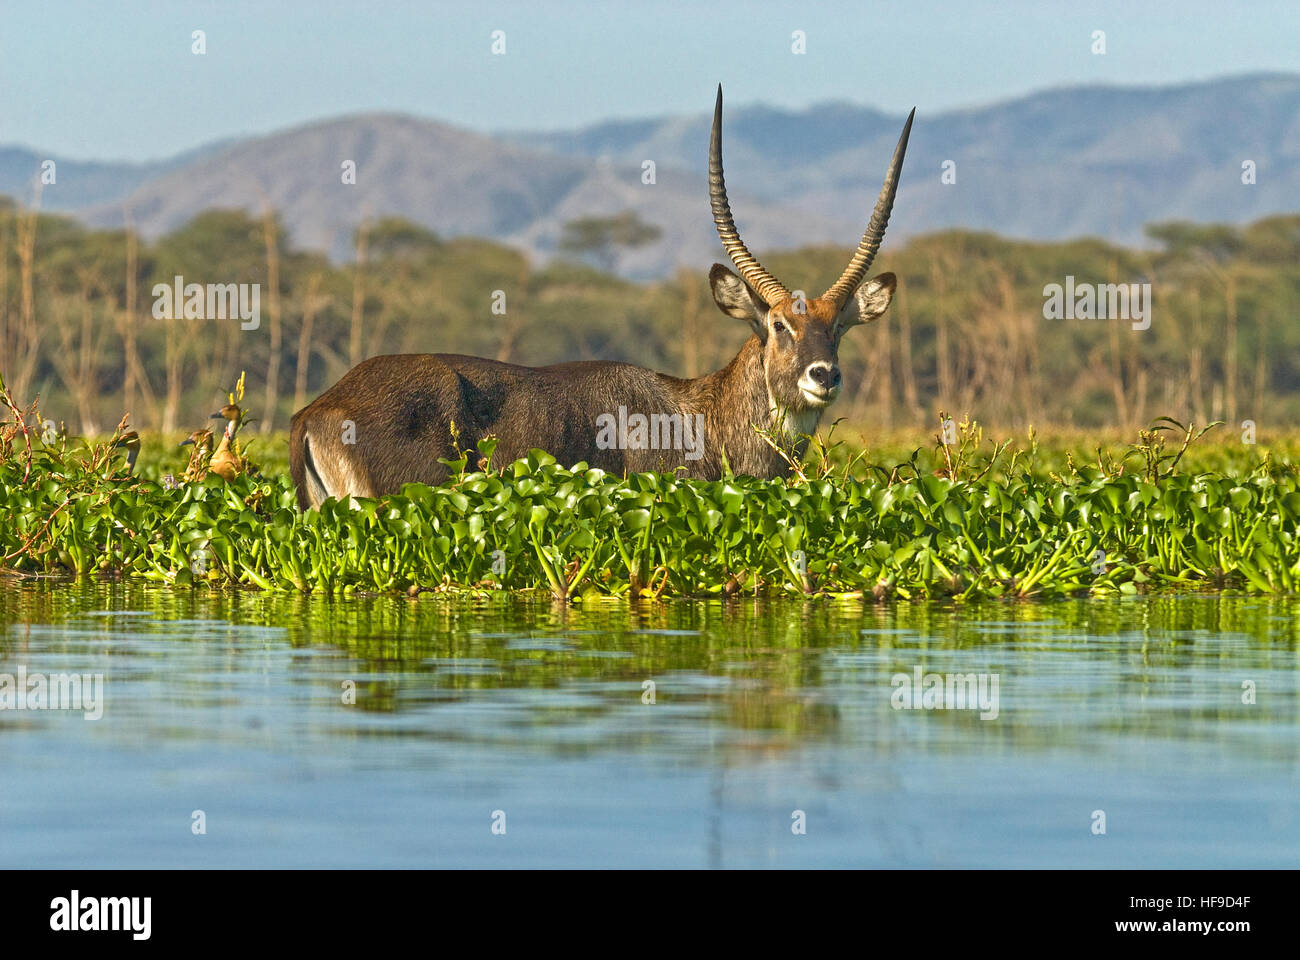 Water buck in River Stock Photo